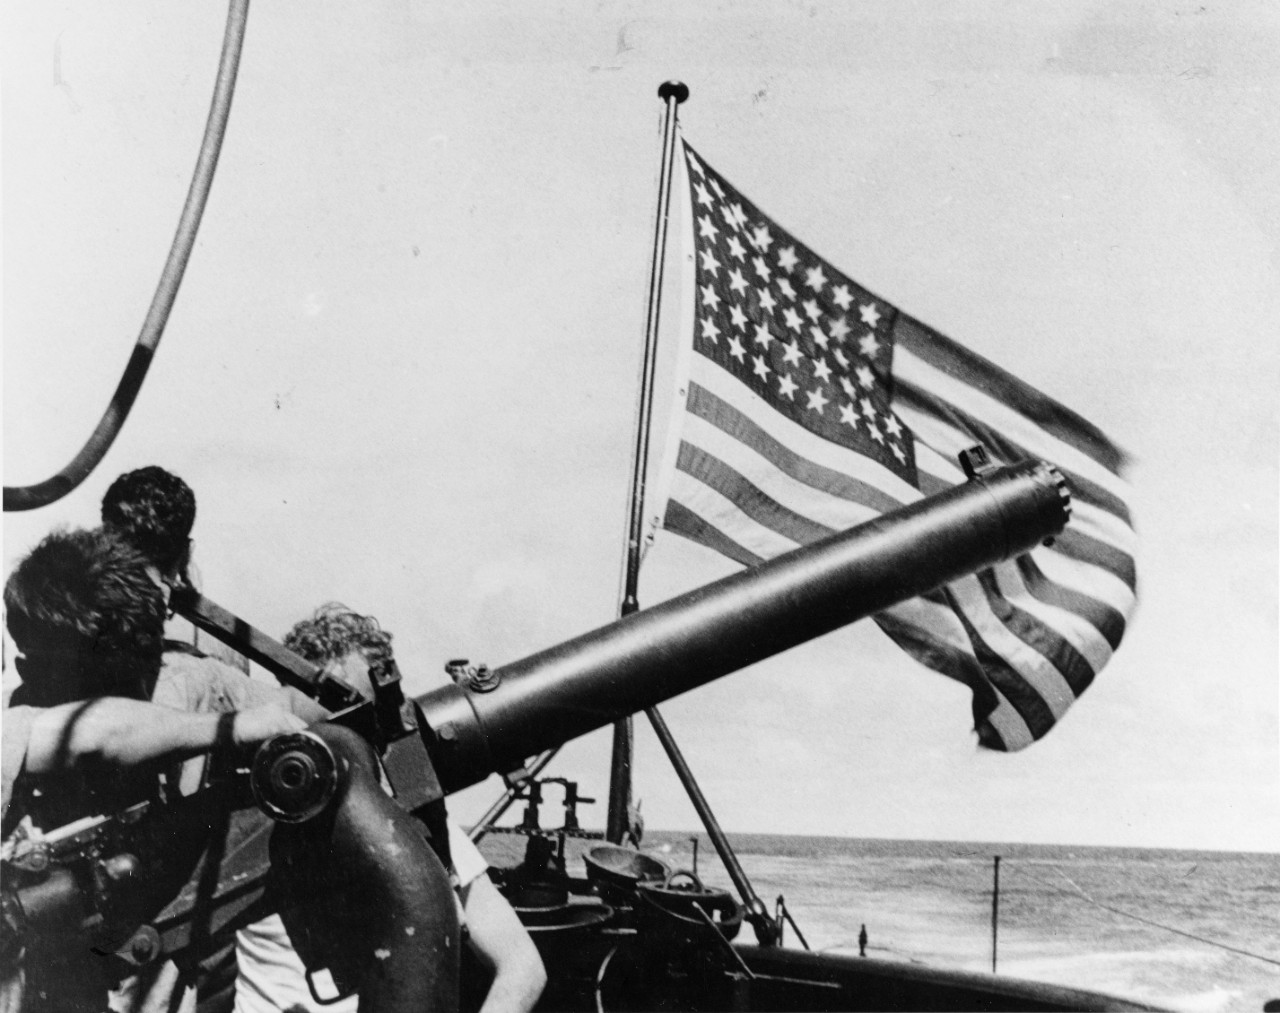 .50 caliber machine gun in action on board USS Silversides (SS-236), in 1942.